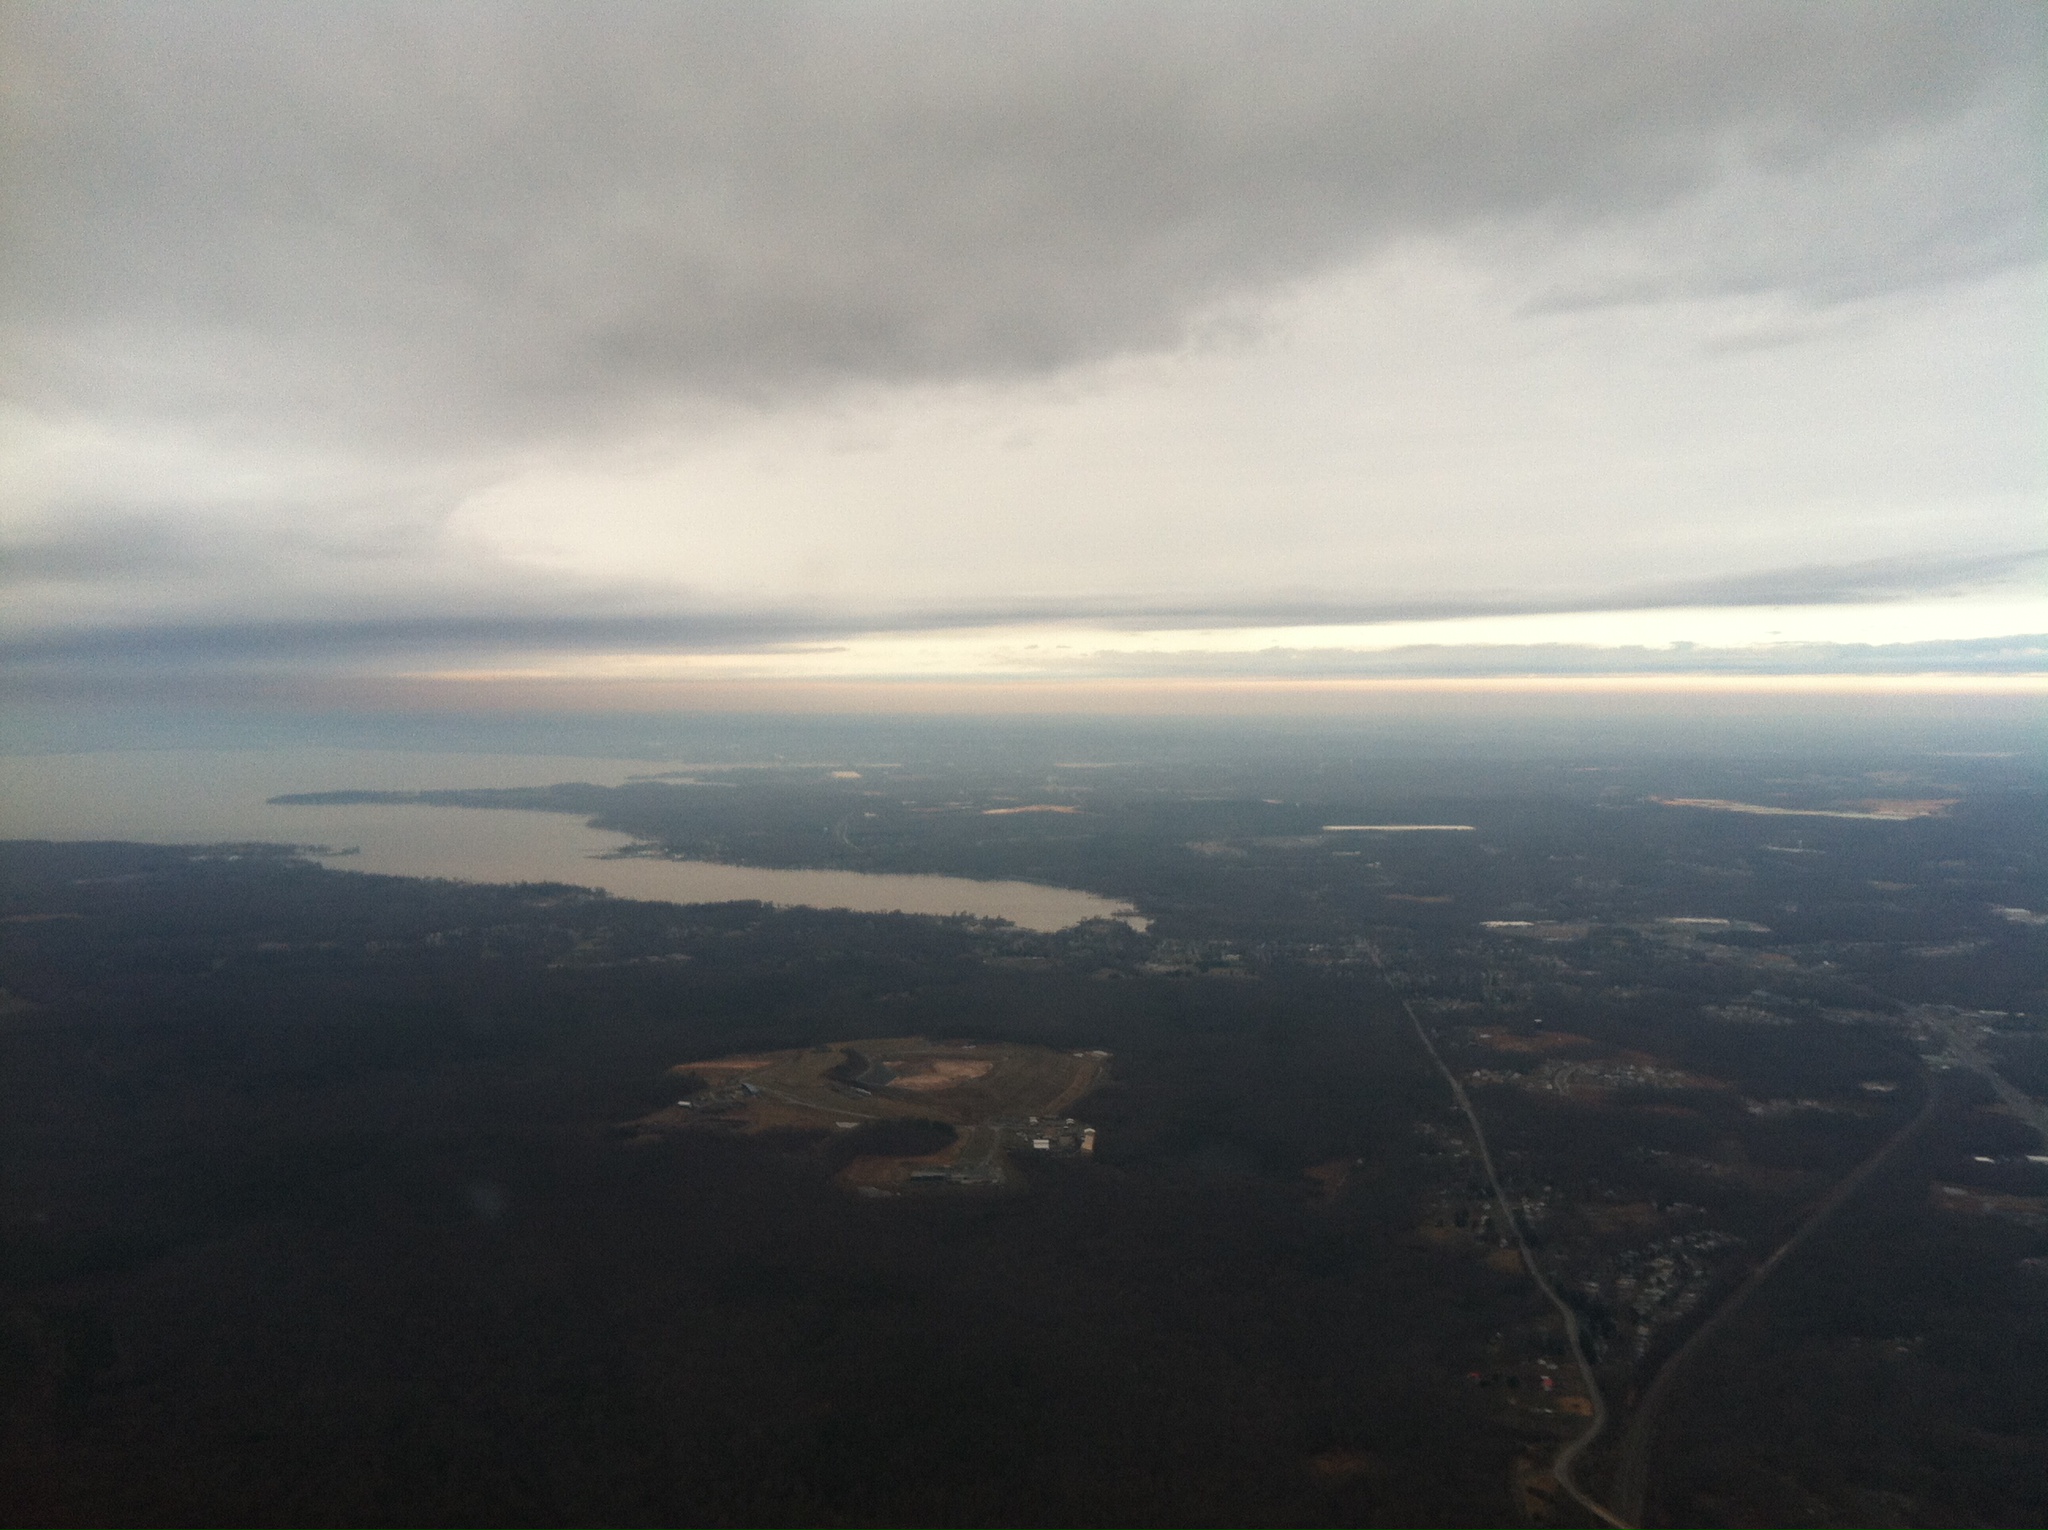 Views over the Chesapeake